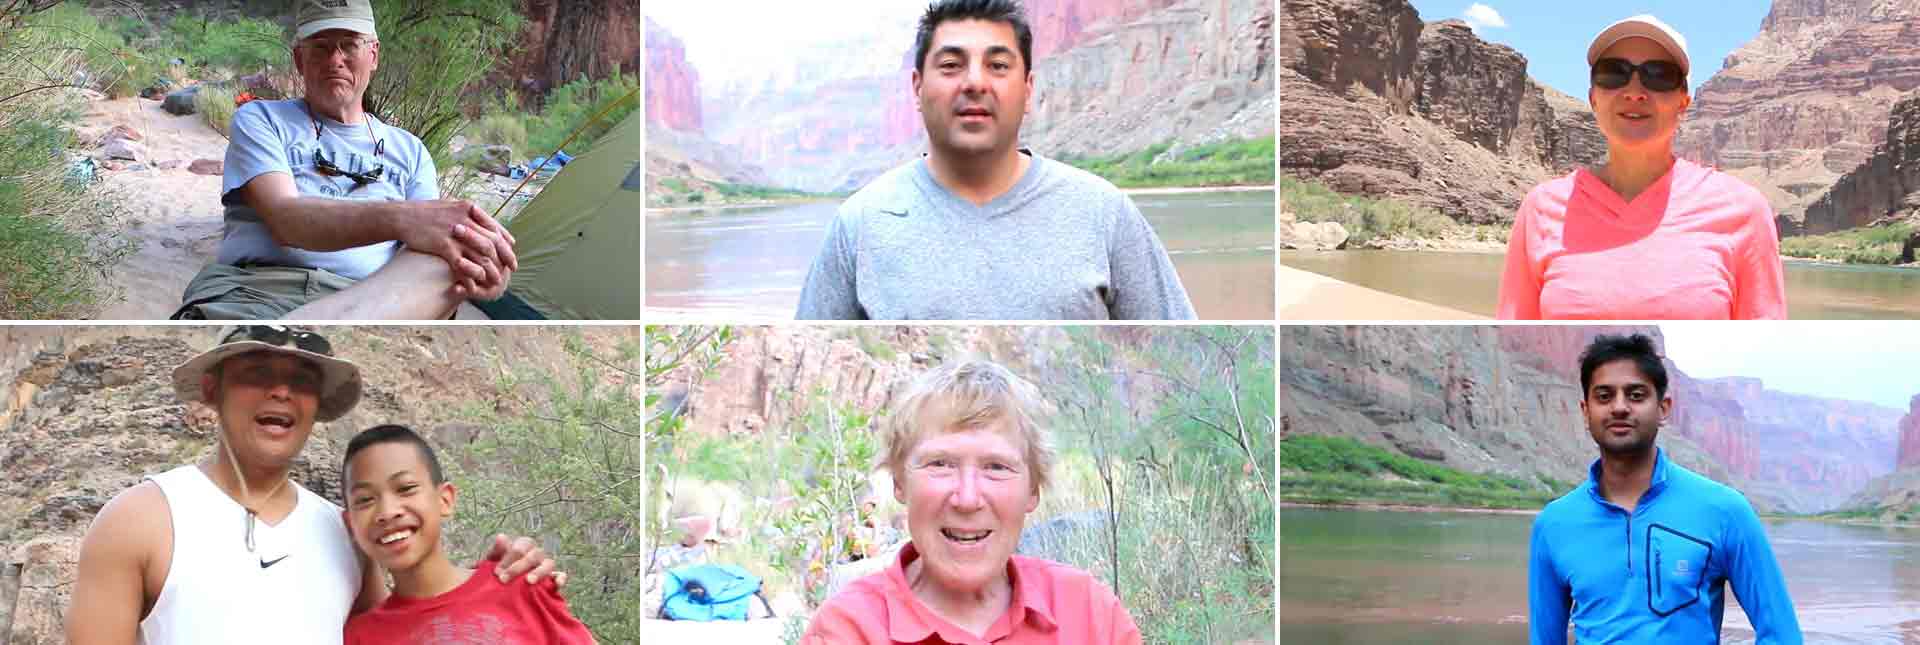 Advantage Grand Canyon rafting trip client reviews